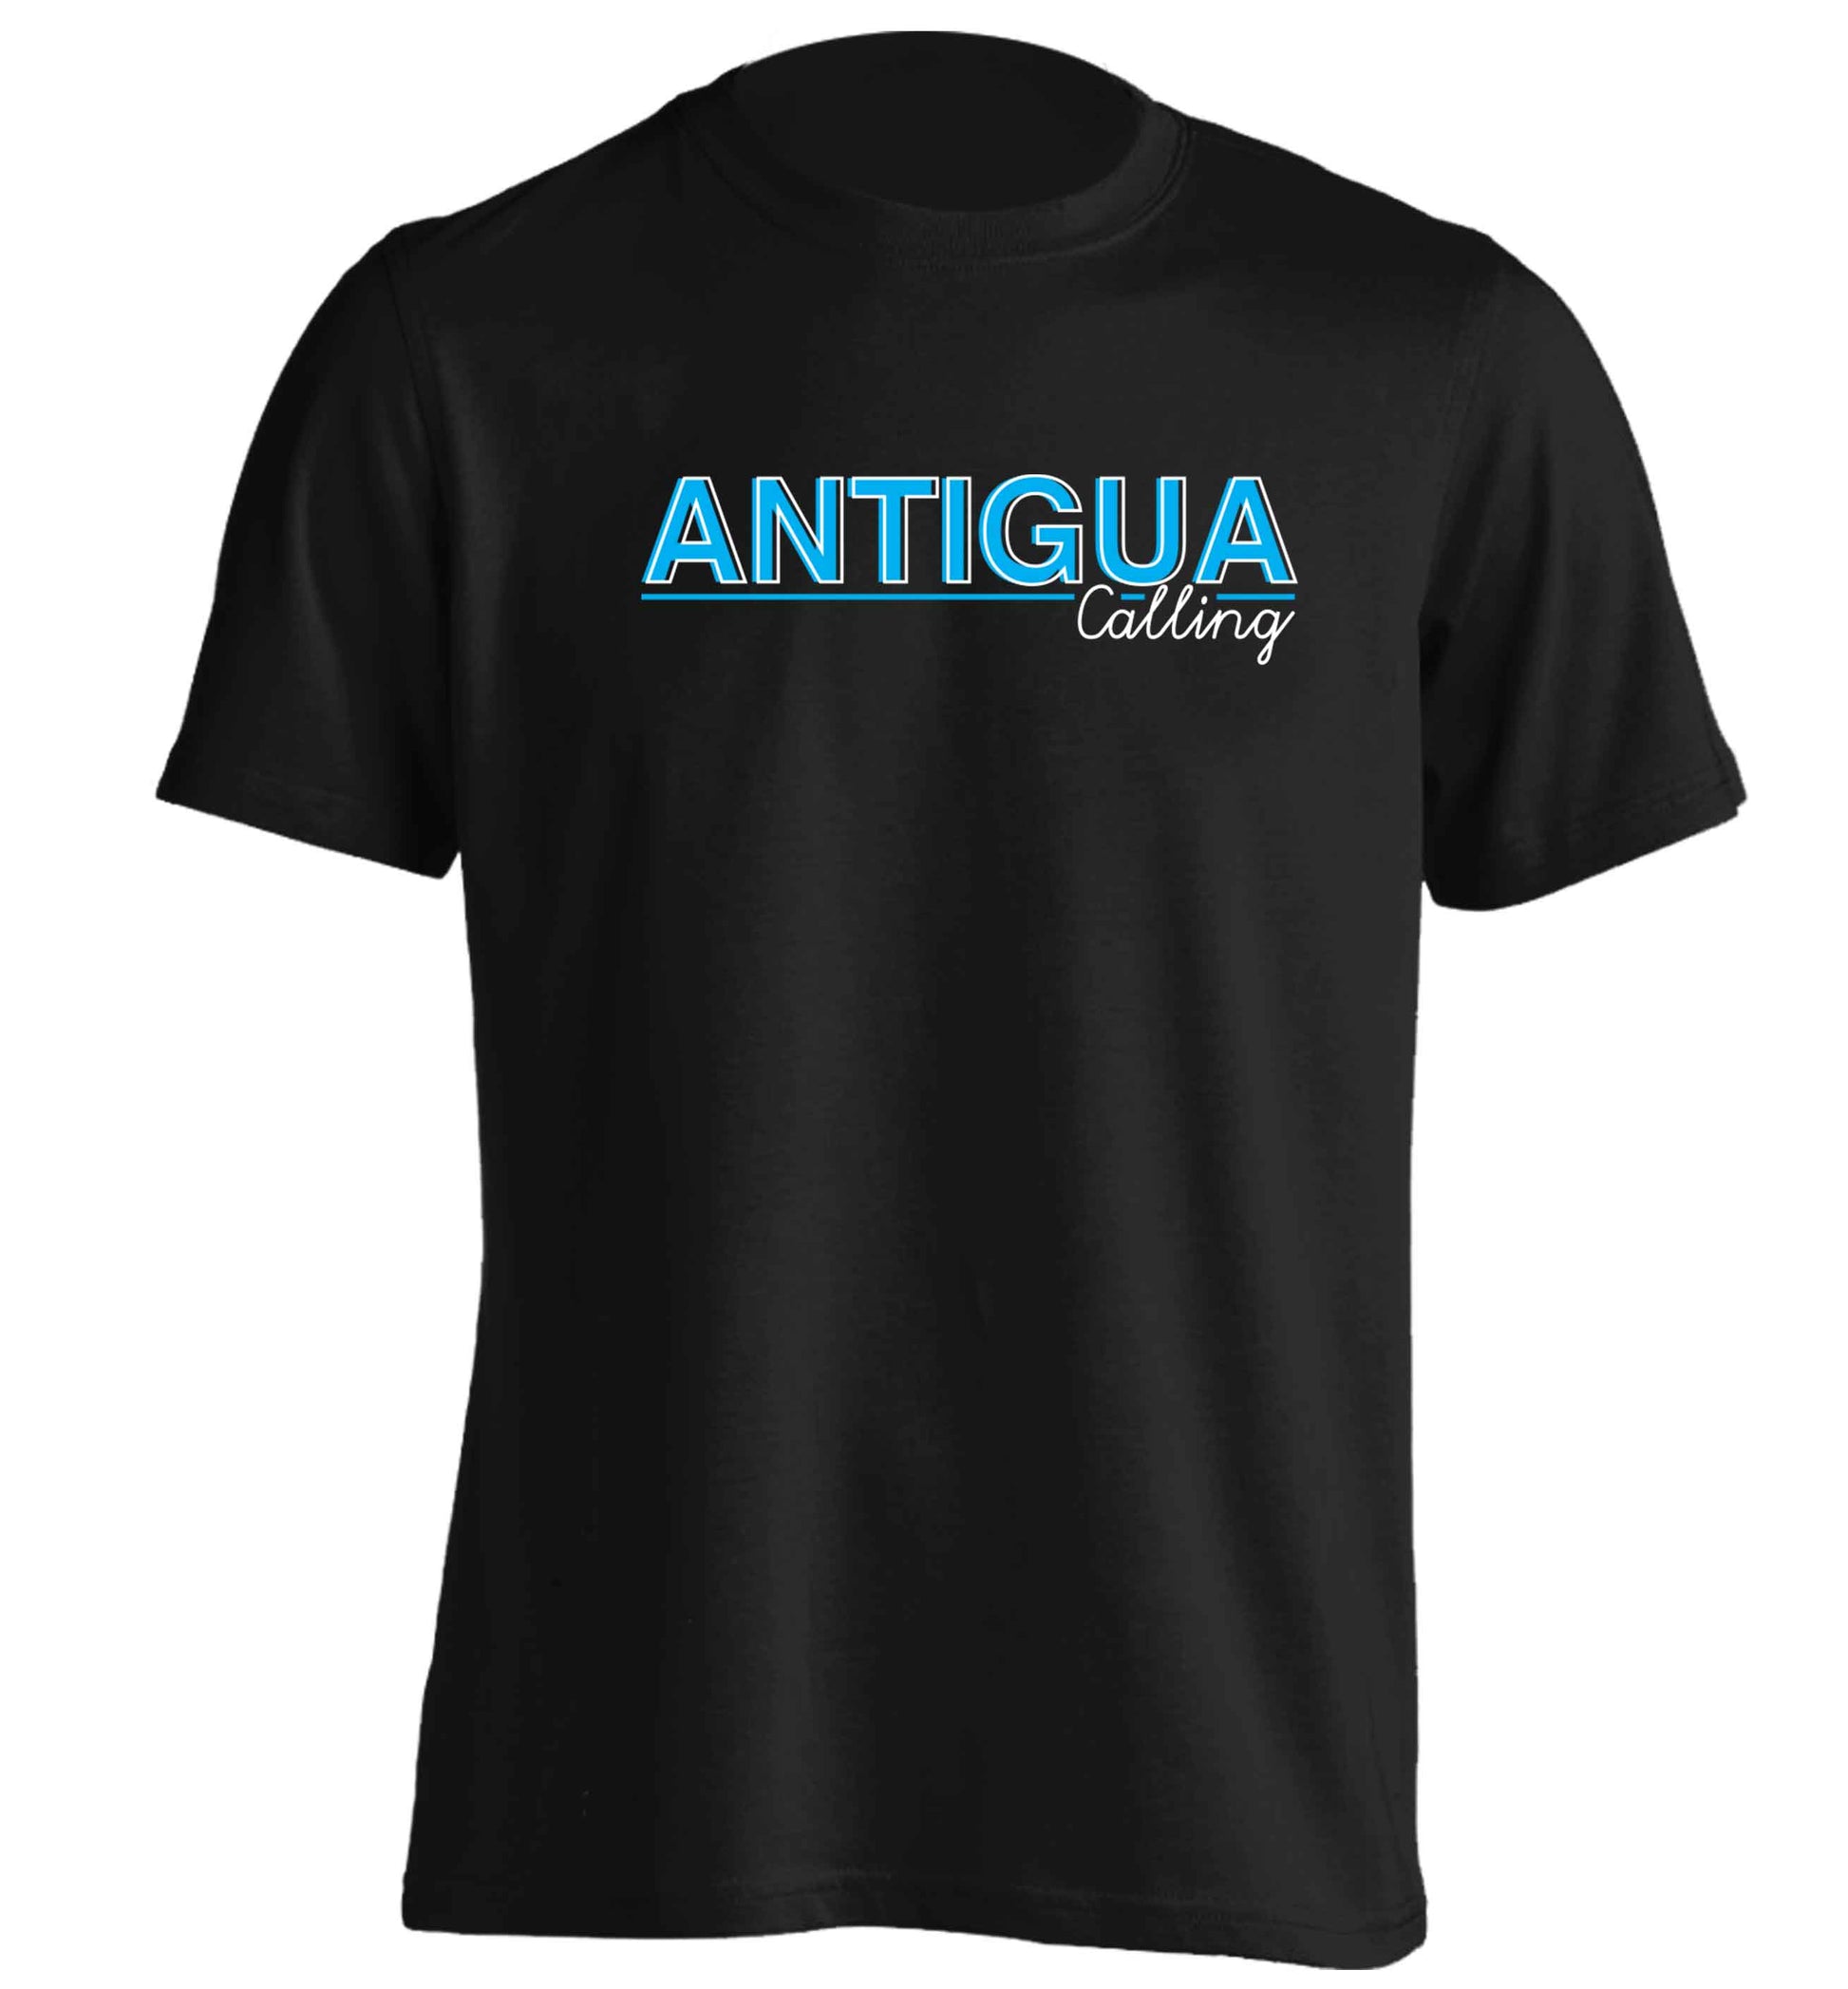 Antigua calling adults unisex black Tshirt 2XL